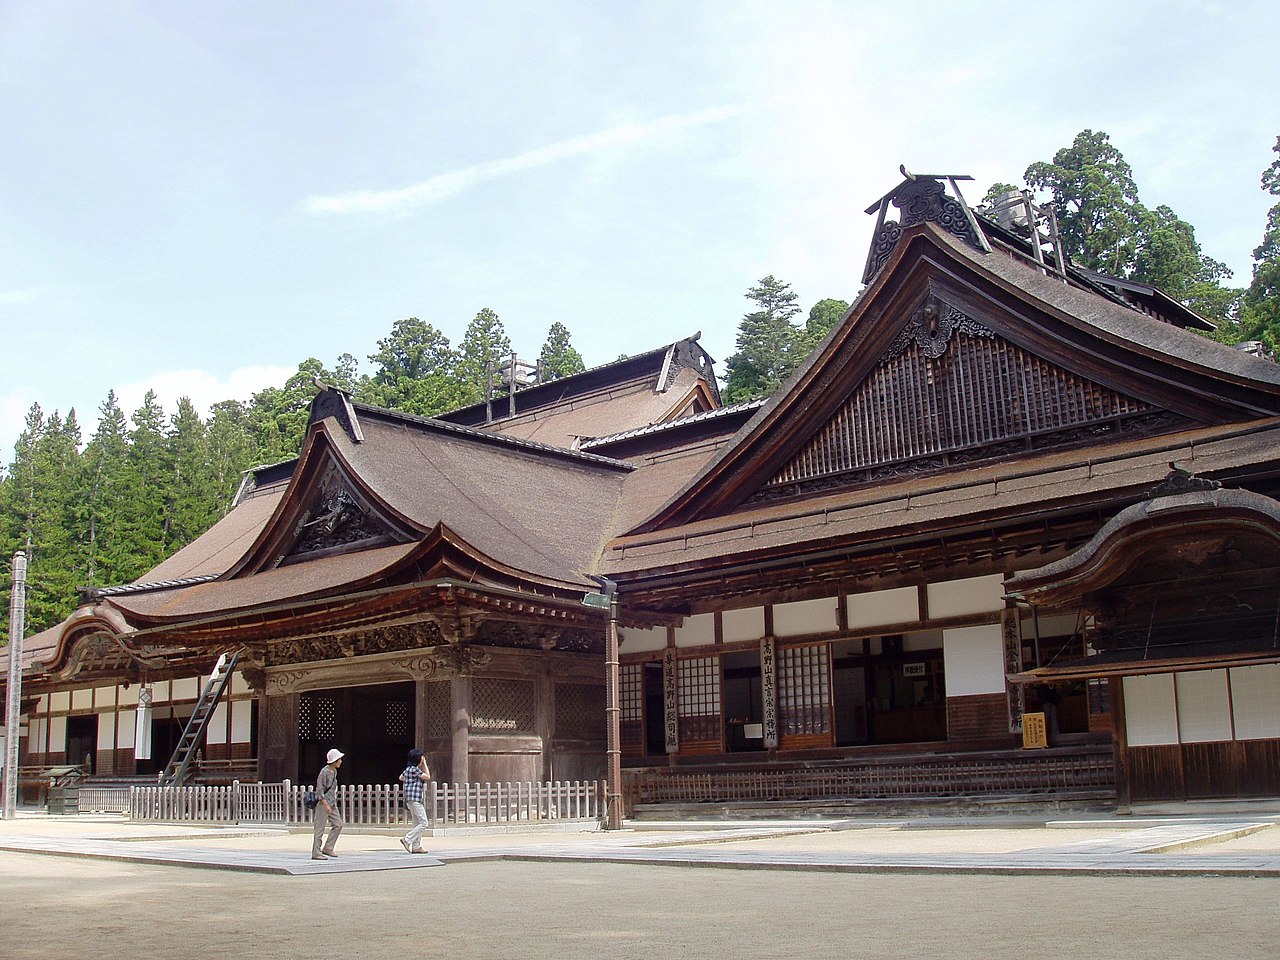 Monte Kōya 1280px-Kongobuji_Temple%2C_Koyasan%2C_Japan_-_front_facade